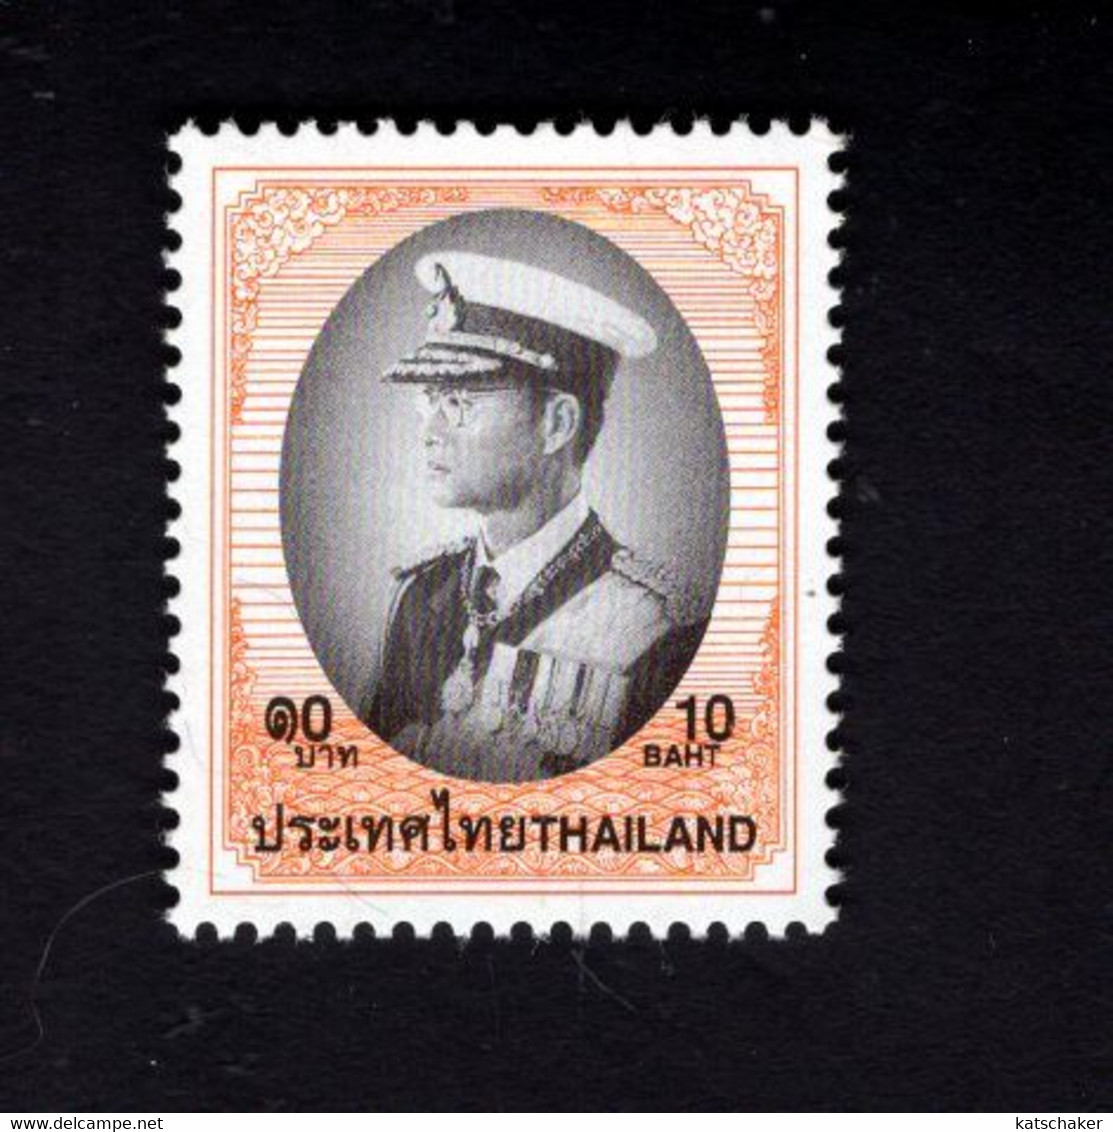 THAILAND 1997 (XX) SCOTT 1728 MINT NEVER HINGED - KING BHUMIBOL ADULYADEJ - Thaïlande